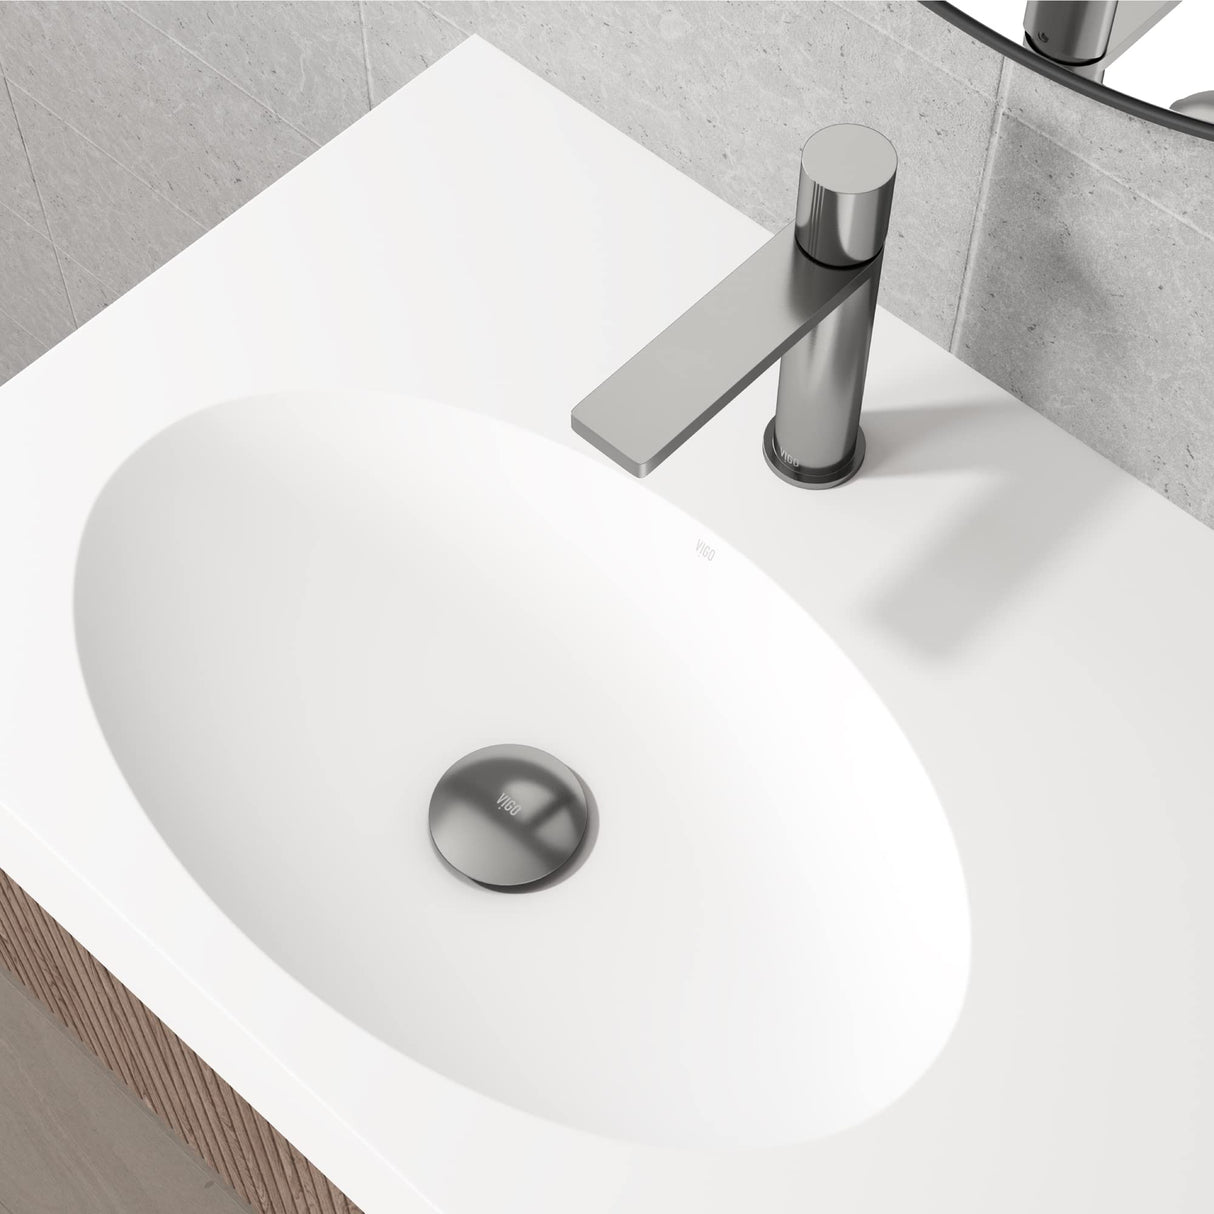 VIGO VG16002BN 2.75" Diameter Vessel Bathroom Sink Pop-Up Drain Stopper With Overflow in Brushed Nickel Finish